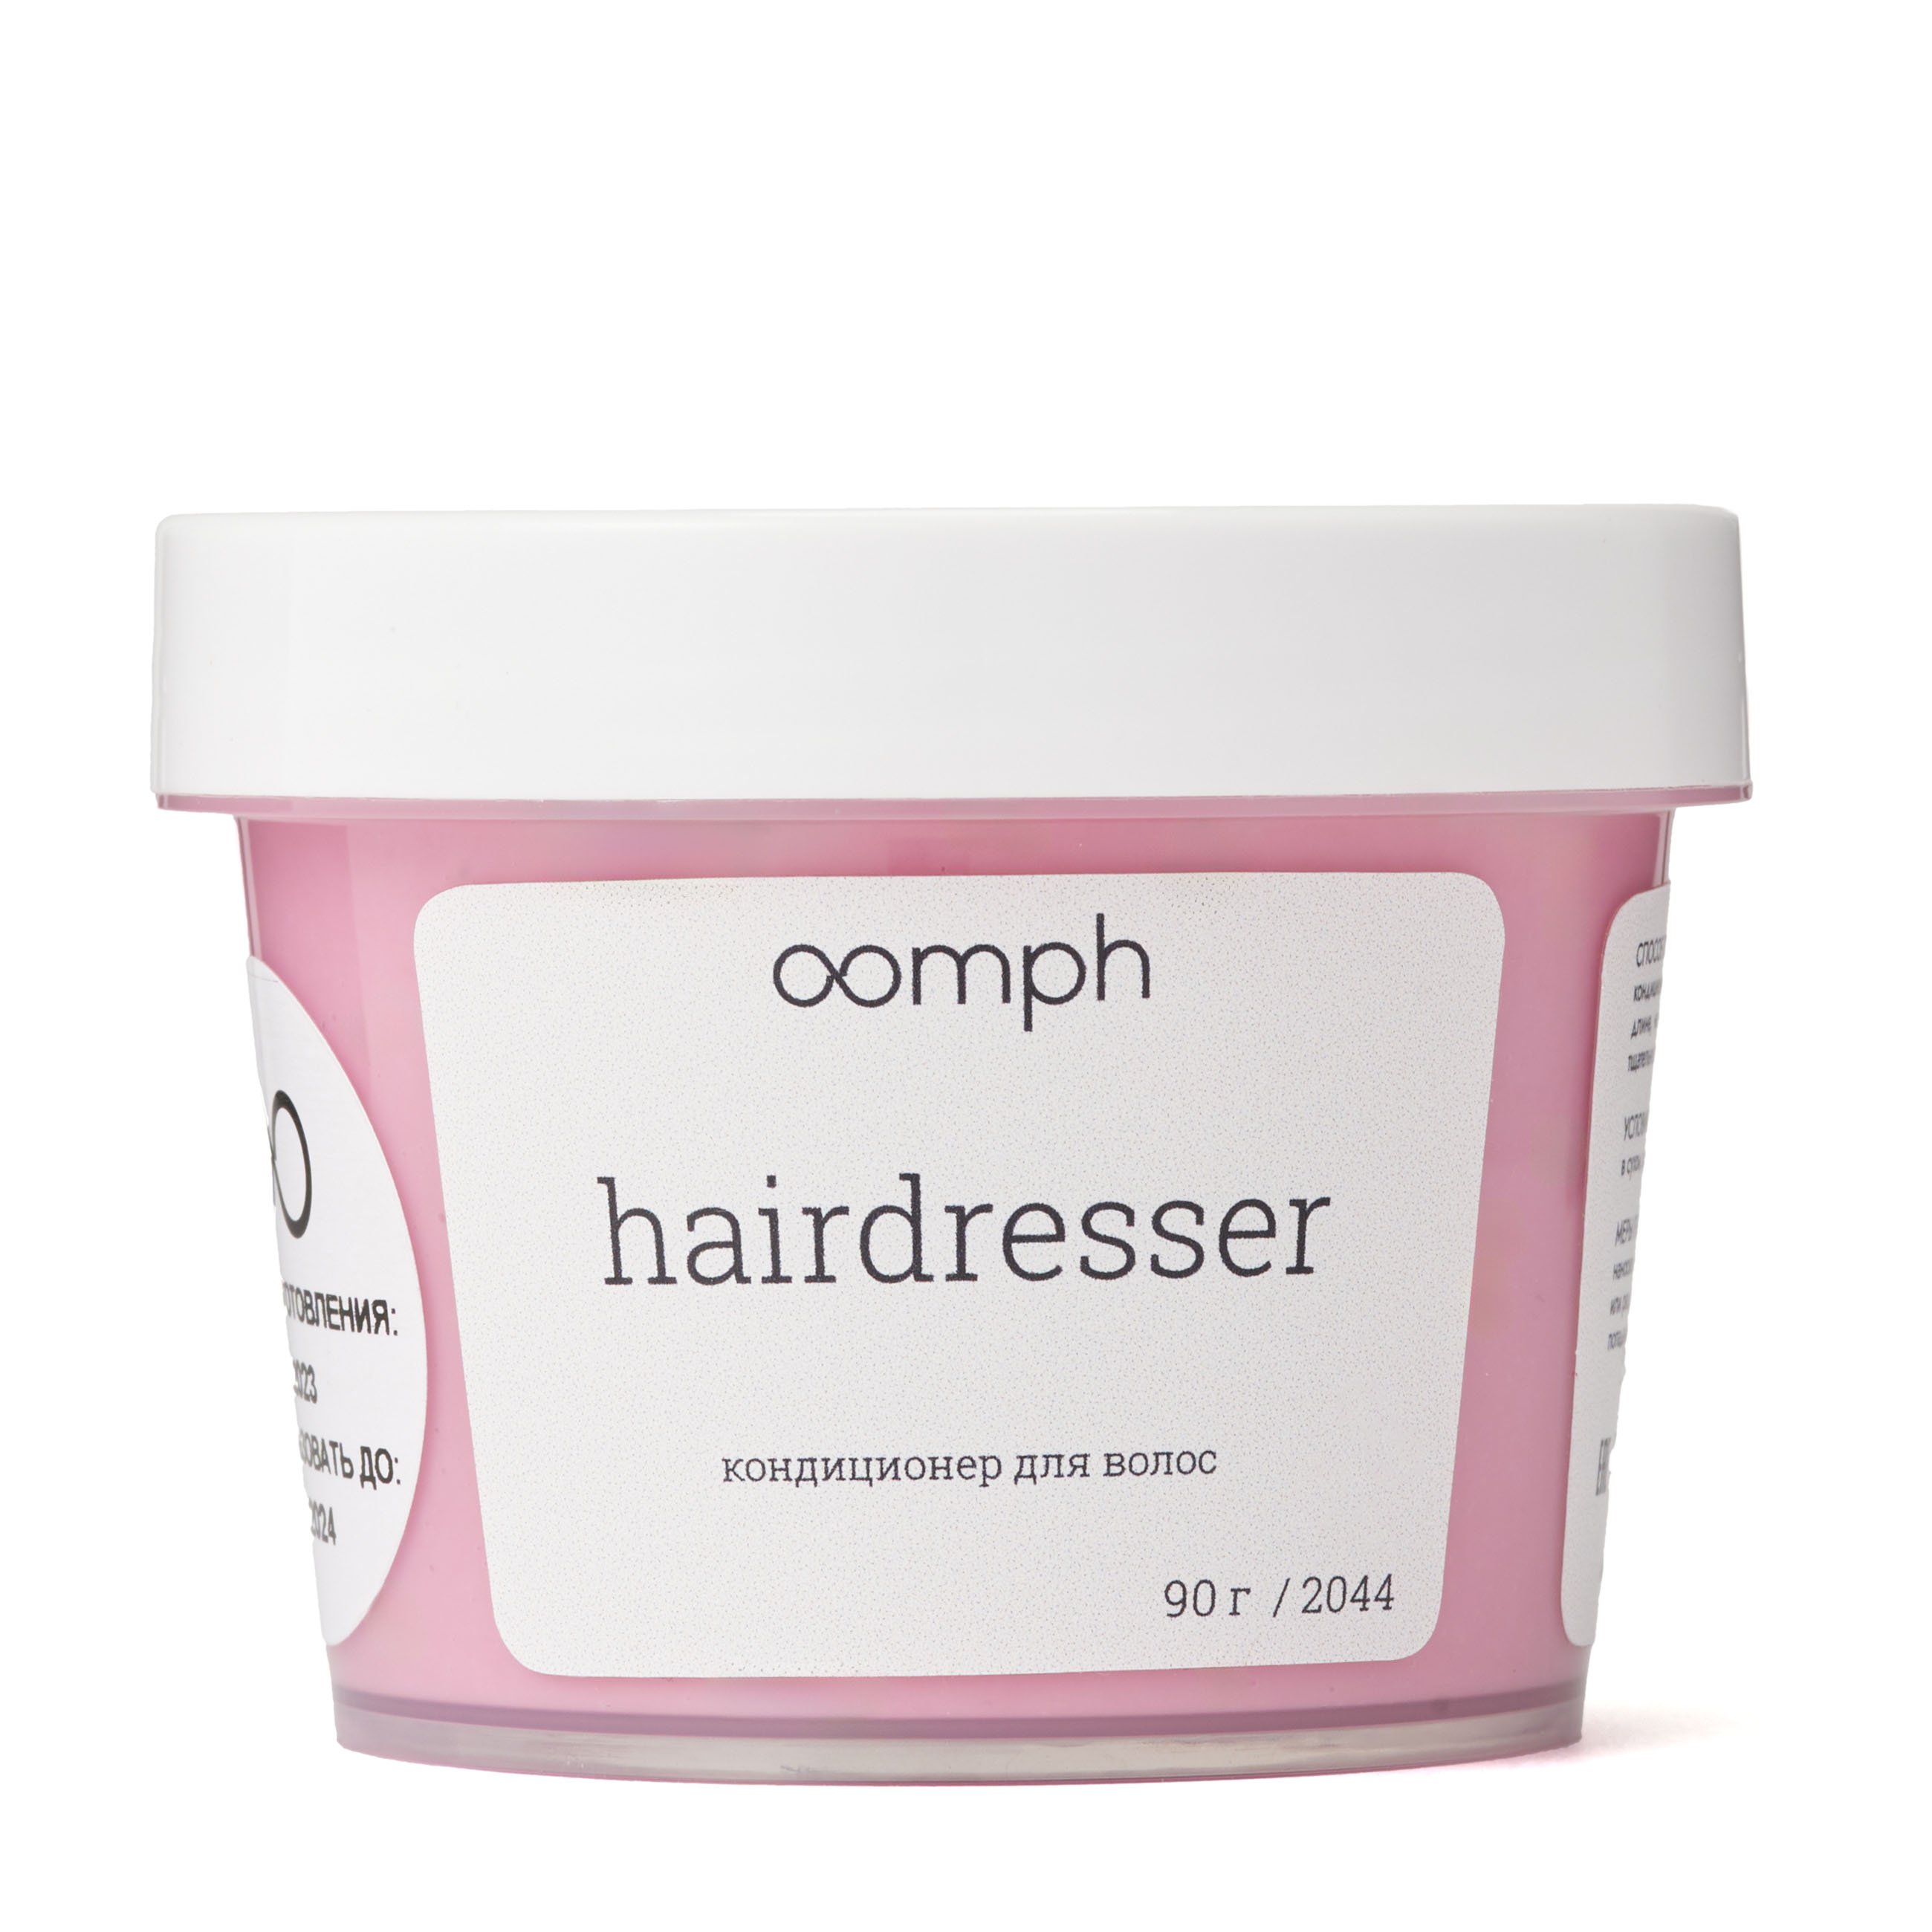 Кондиционер для волос OOMPH Hairdresser 90г масло кондиционер essential conditioning oil 90a 4 13 мл